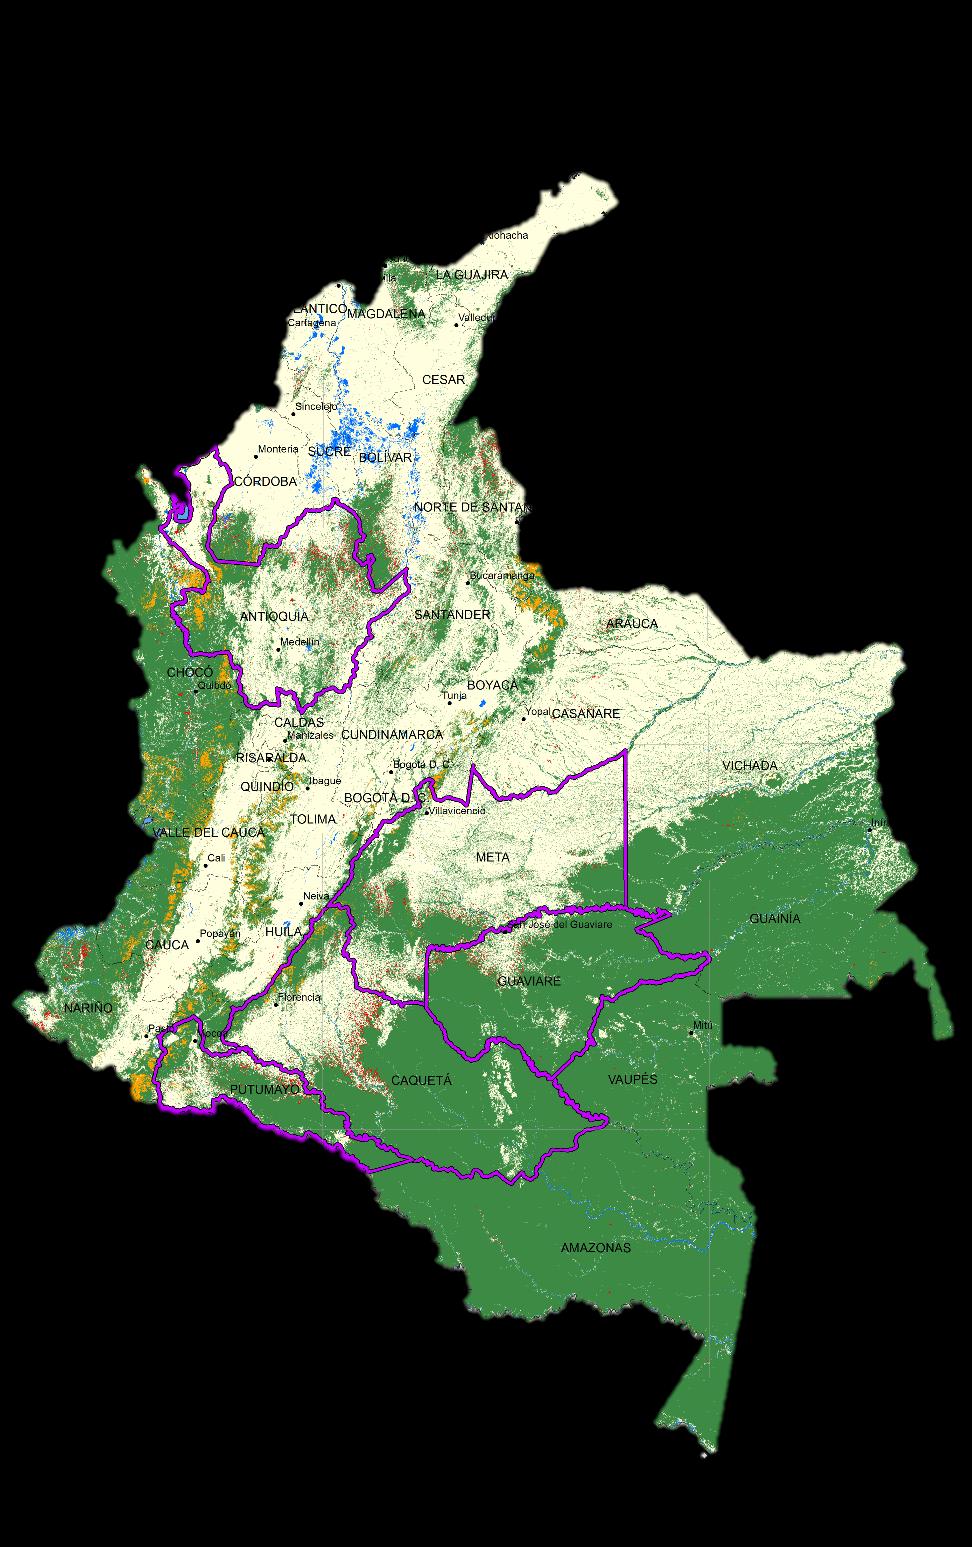 MONITOREO DE DEFORESTACIÓN 2015 Departamentos Deforestación Anual 2015 (ha) % Deforestación Nacional CAQUETA 23,812 19.2 ANTIOQUIA 15,888 12.8 META ** 15,369 12.4 GUAVIARE ** 9,634 7.